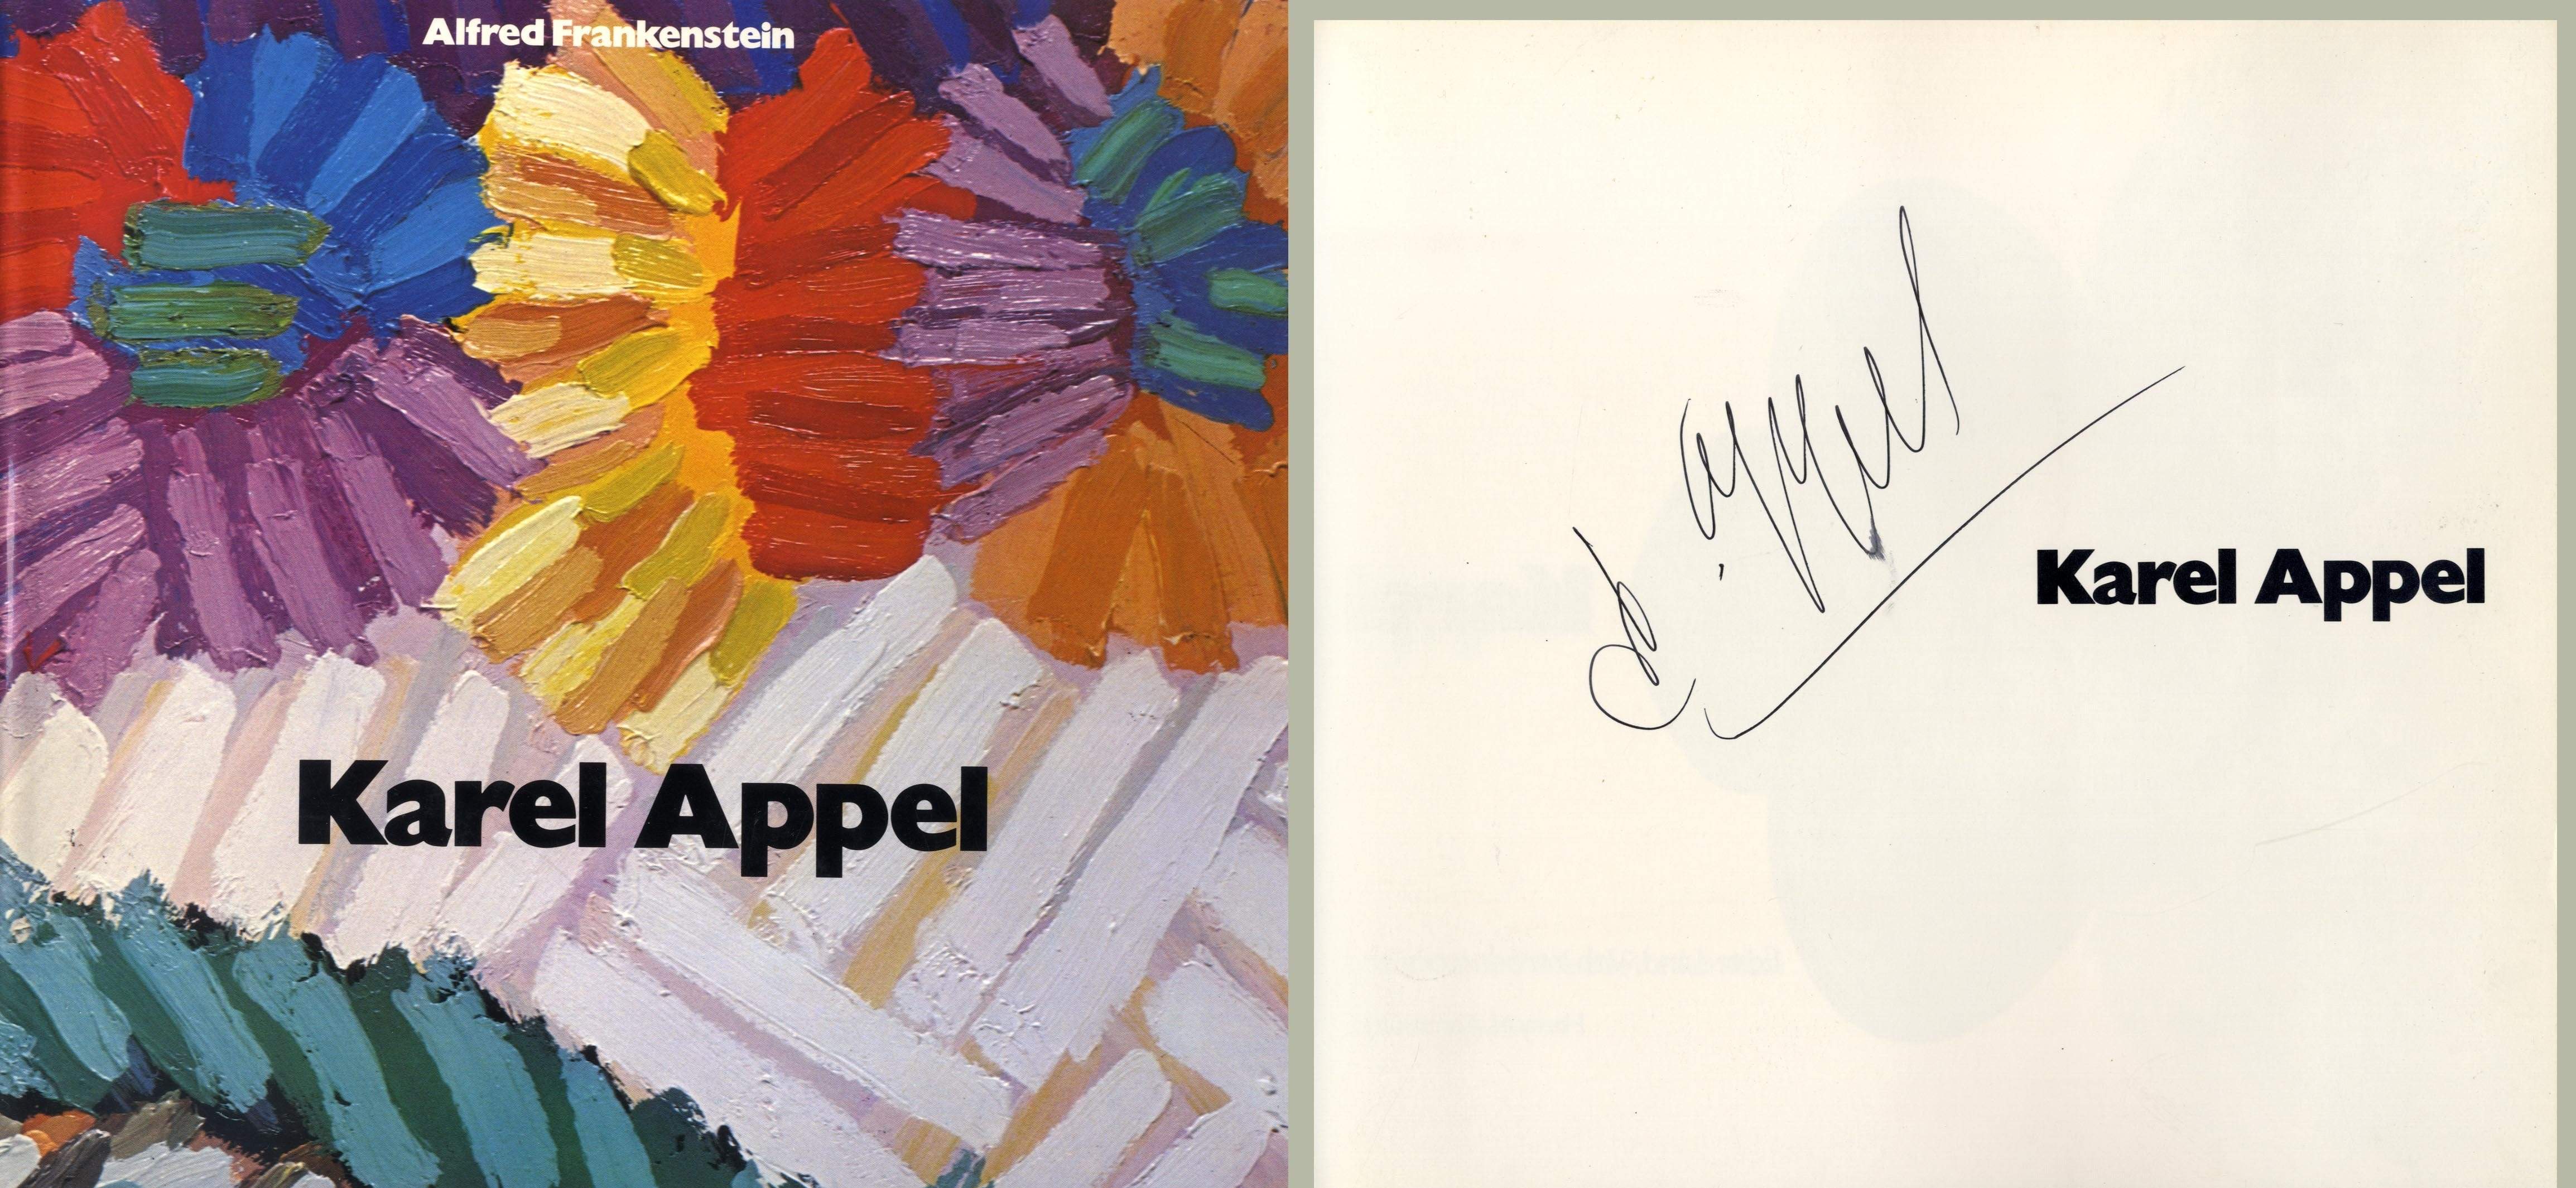 Appel, Karel autograph